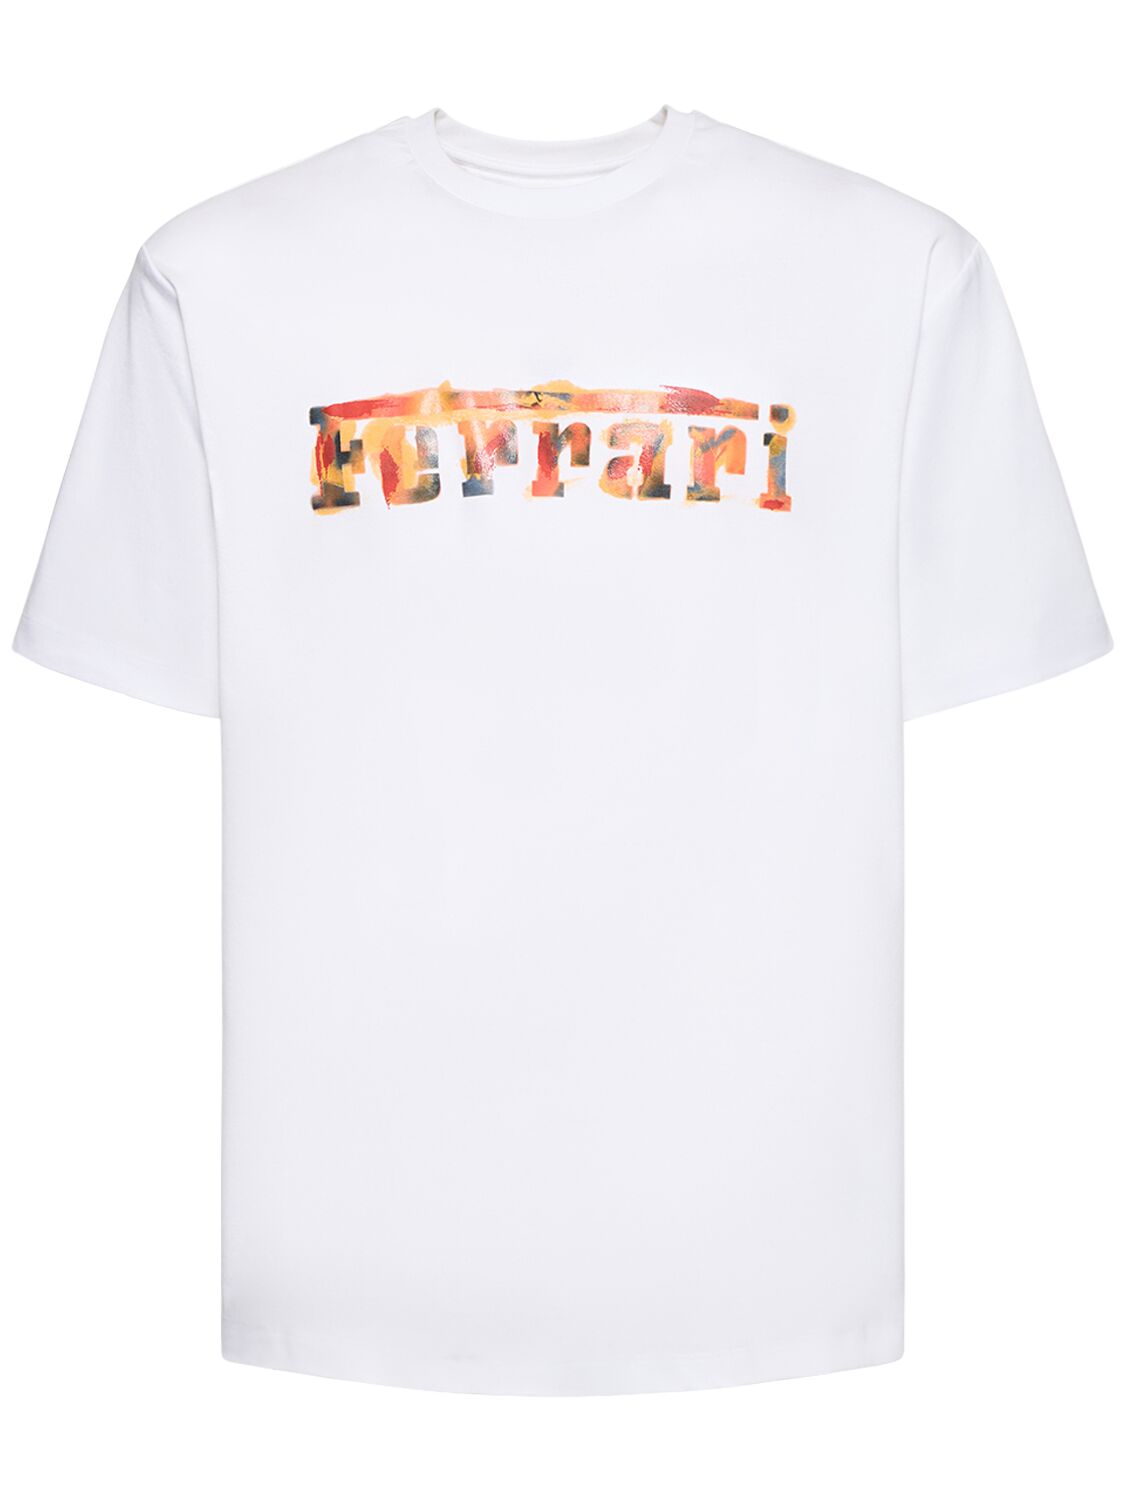 Cotton T-shirt with Ferrari logo